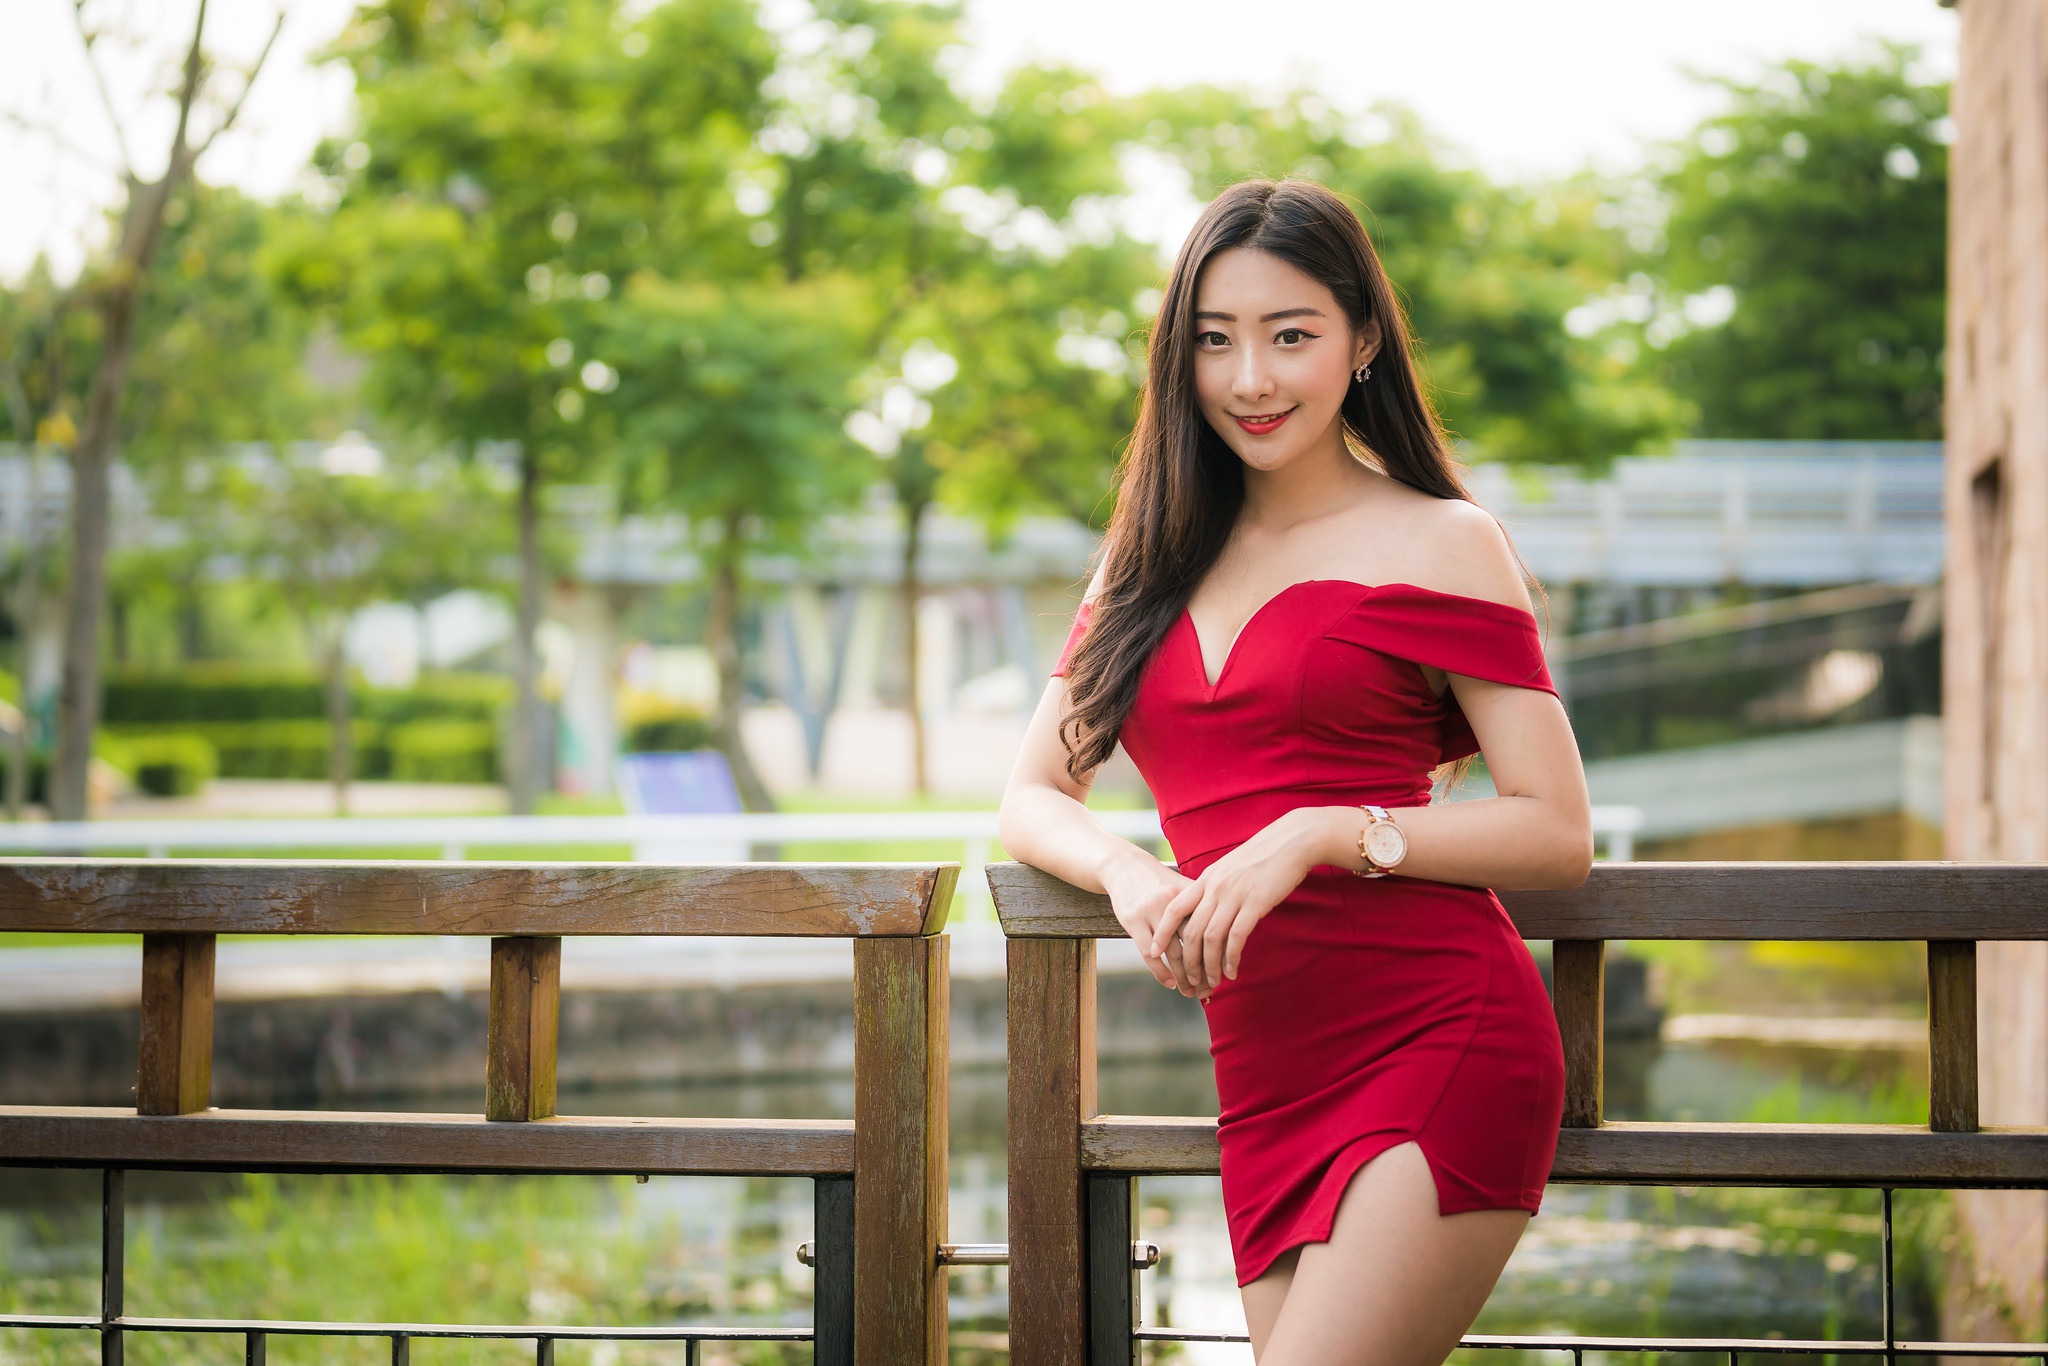 People 2048x1366 Asian women model long hair brunette depth of field red dress minidress leaning railing trees bridge pond bushes wristwatch earring red lipstick